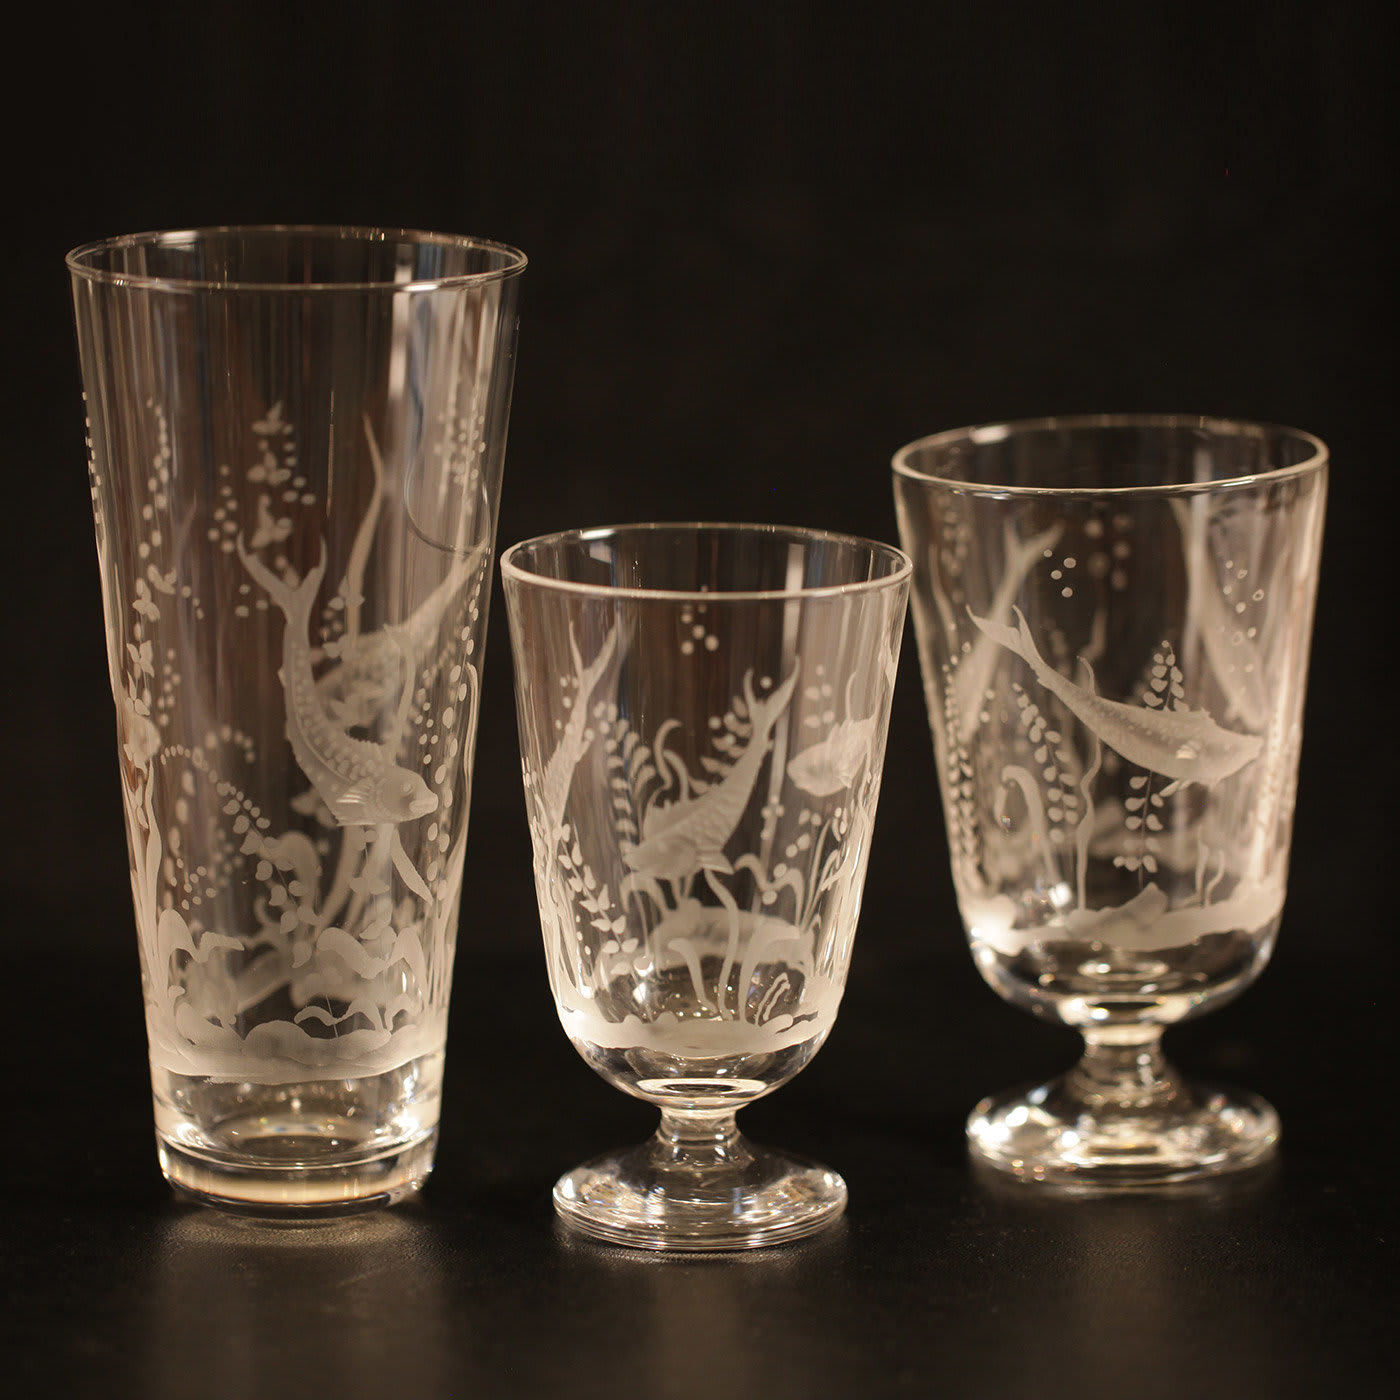 Set of 4 Ejermann Crystal Glasses - Moleria Locchi